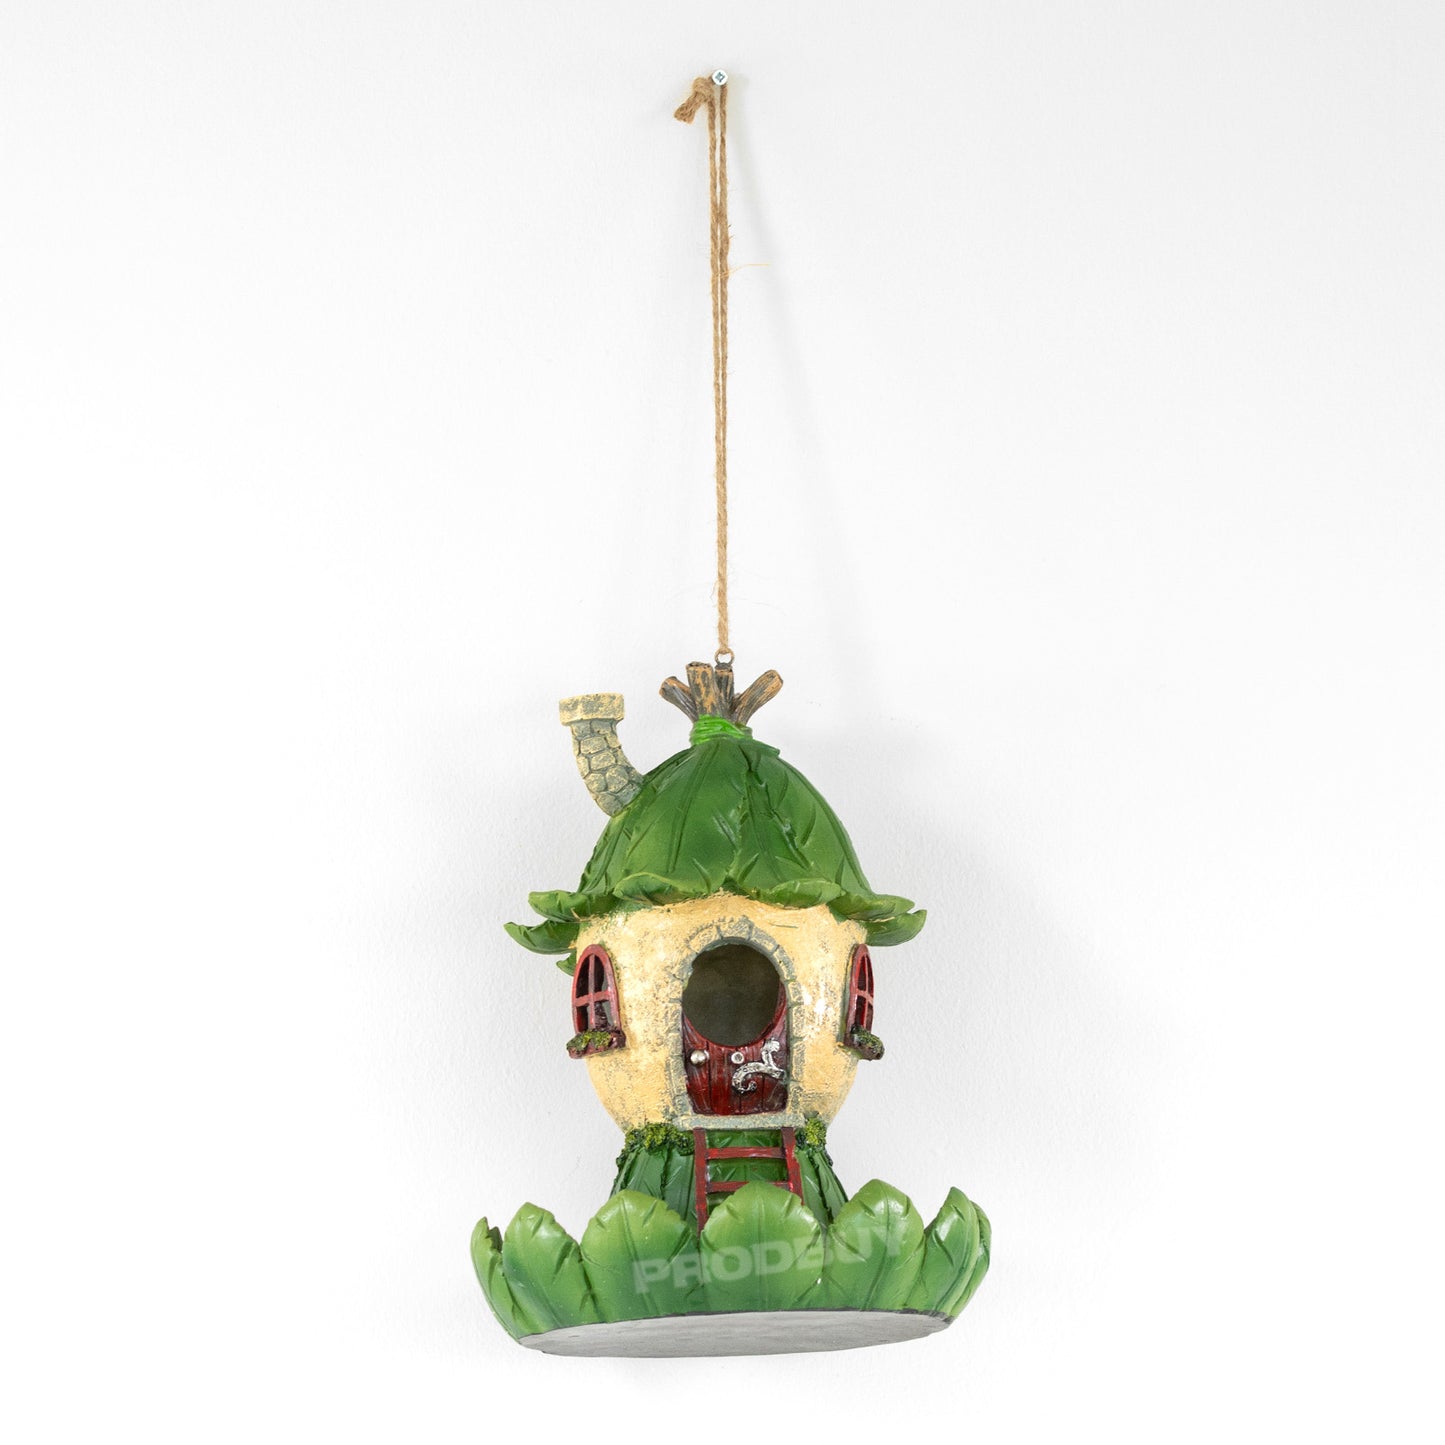 Resin Hanging Bird House - Pixie House Fairy Garden Style Design